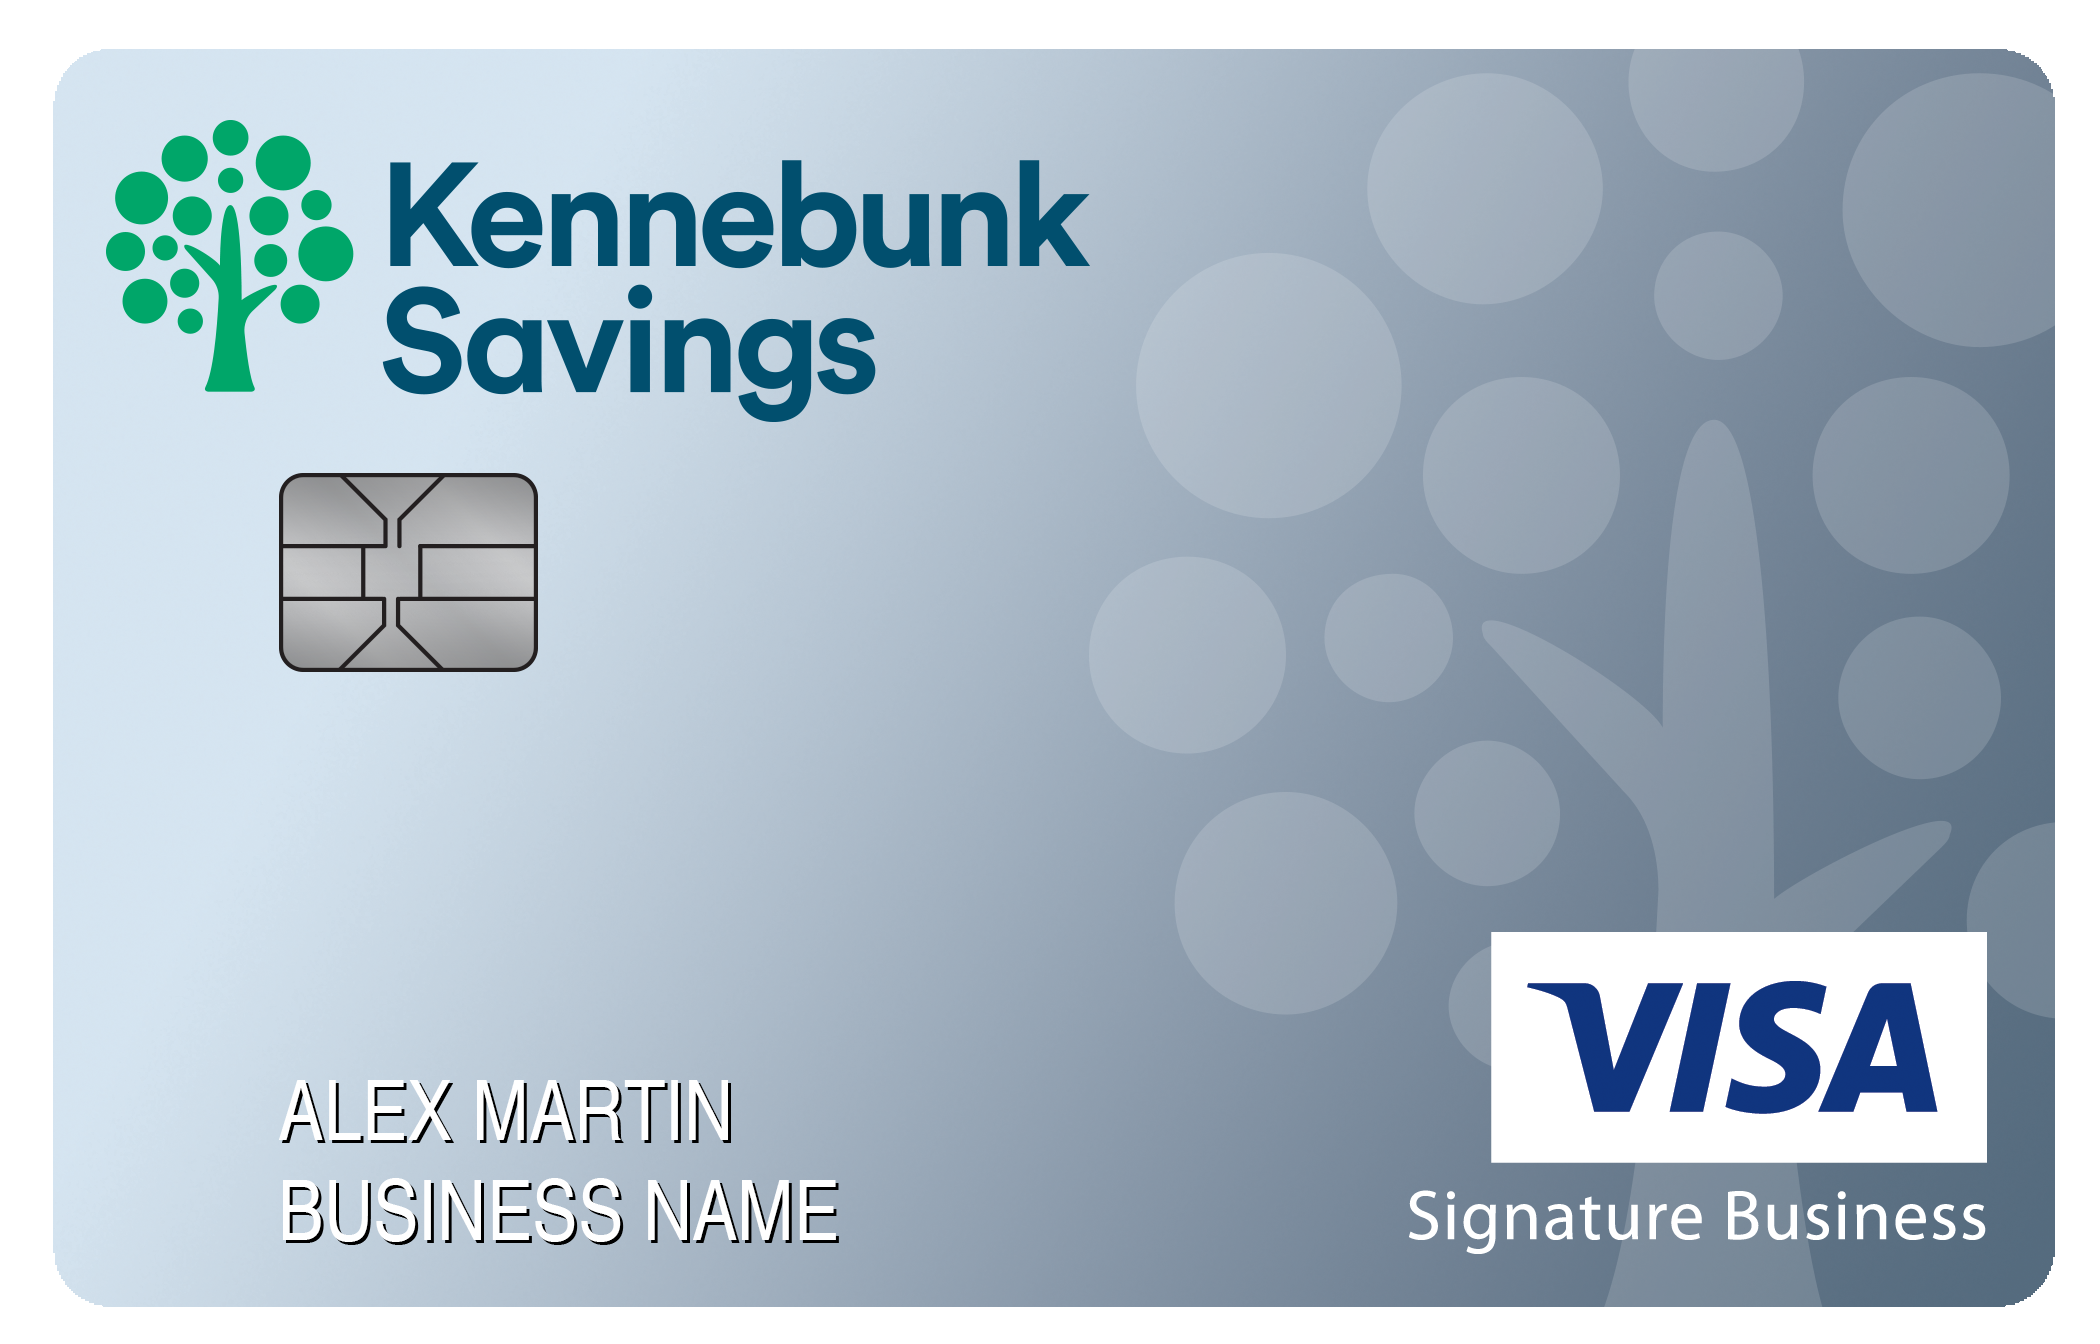 Kennebunk Savings Smart Business Rewards Card